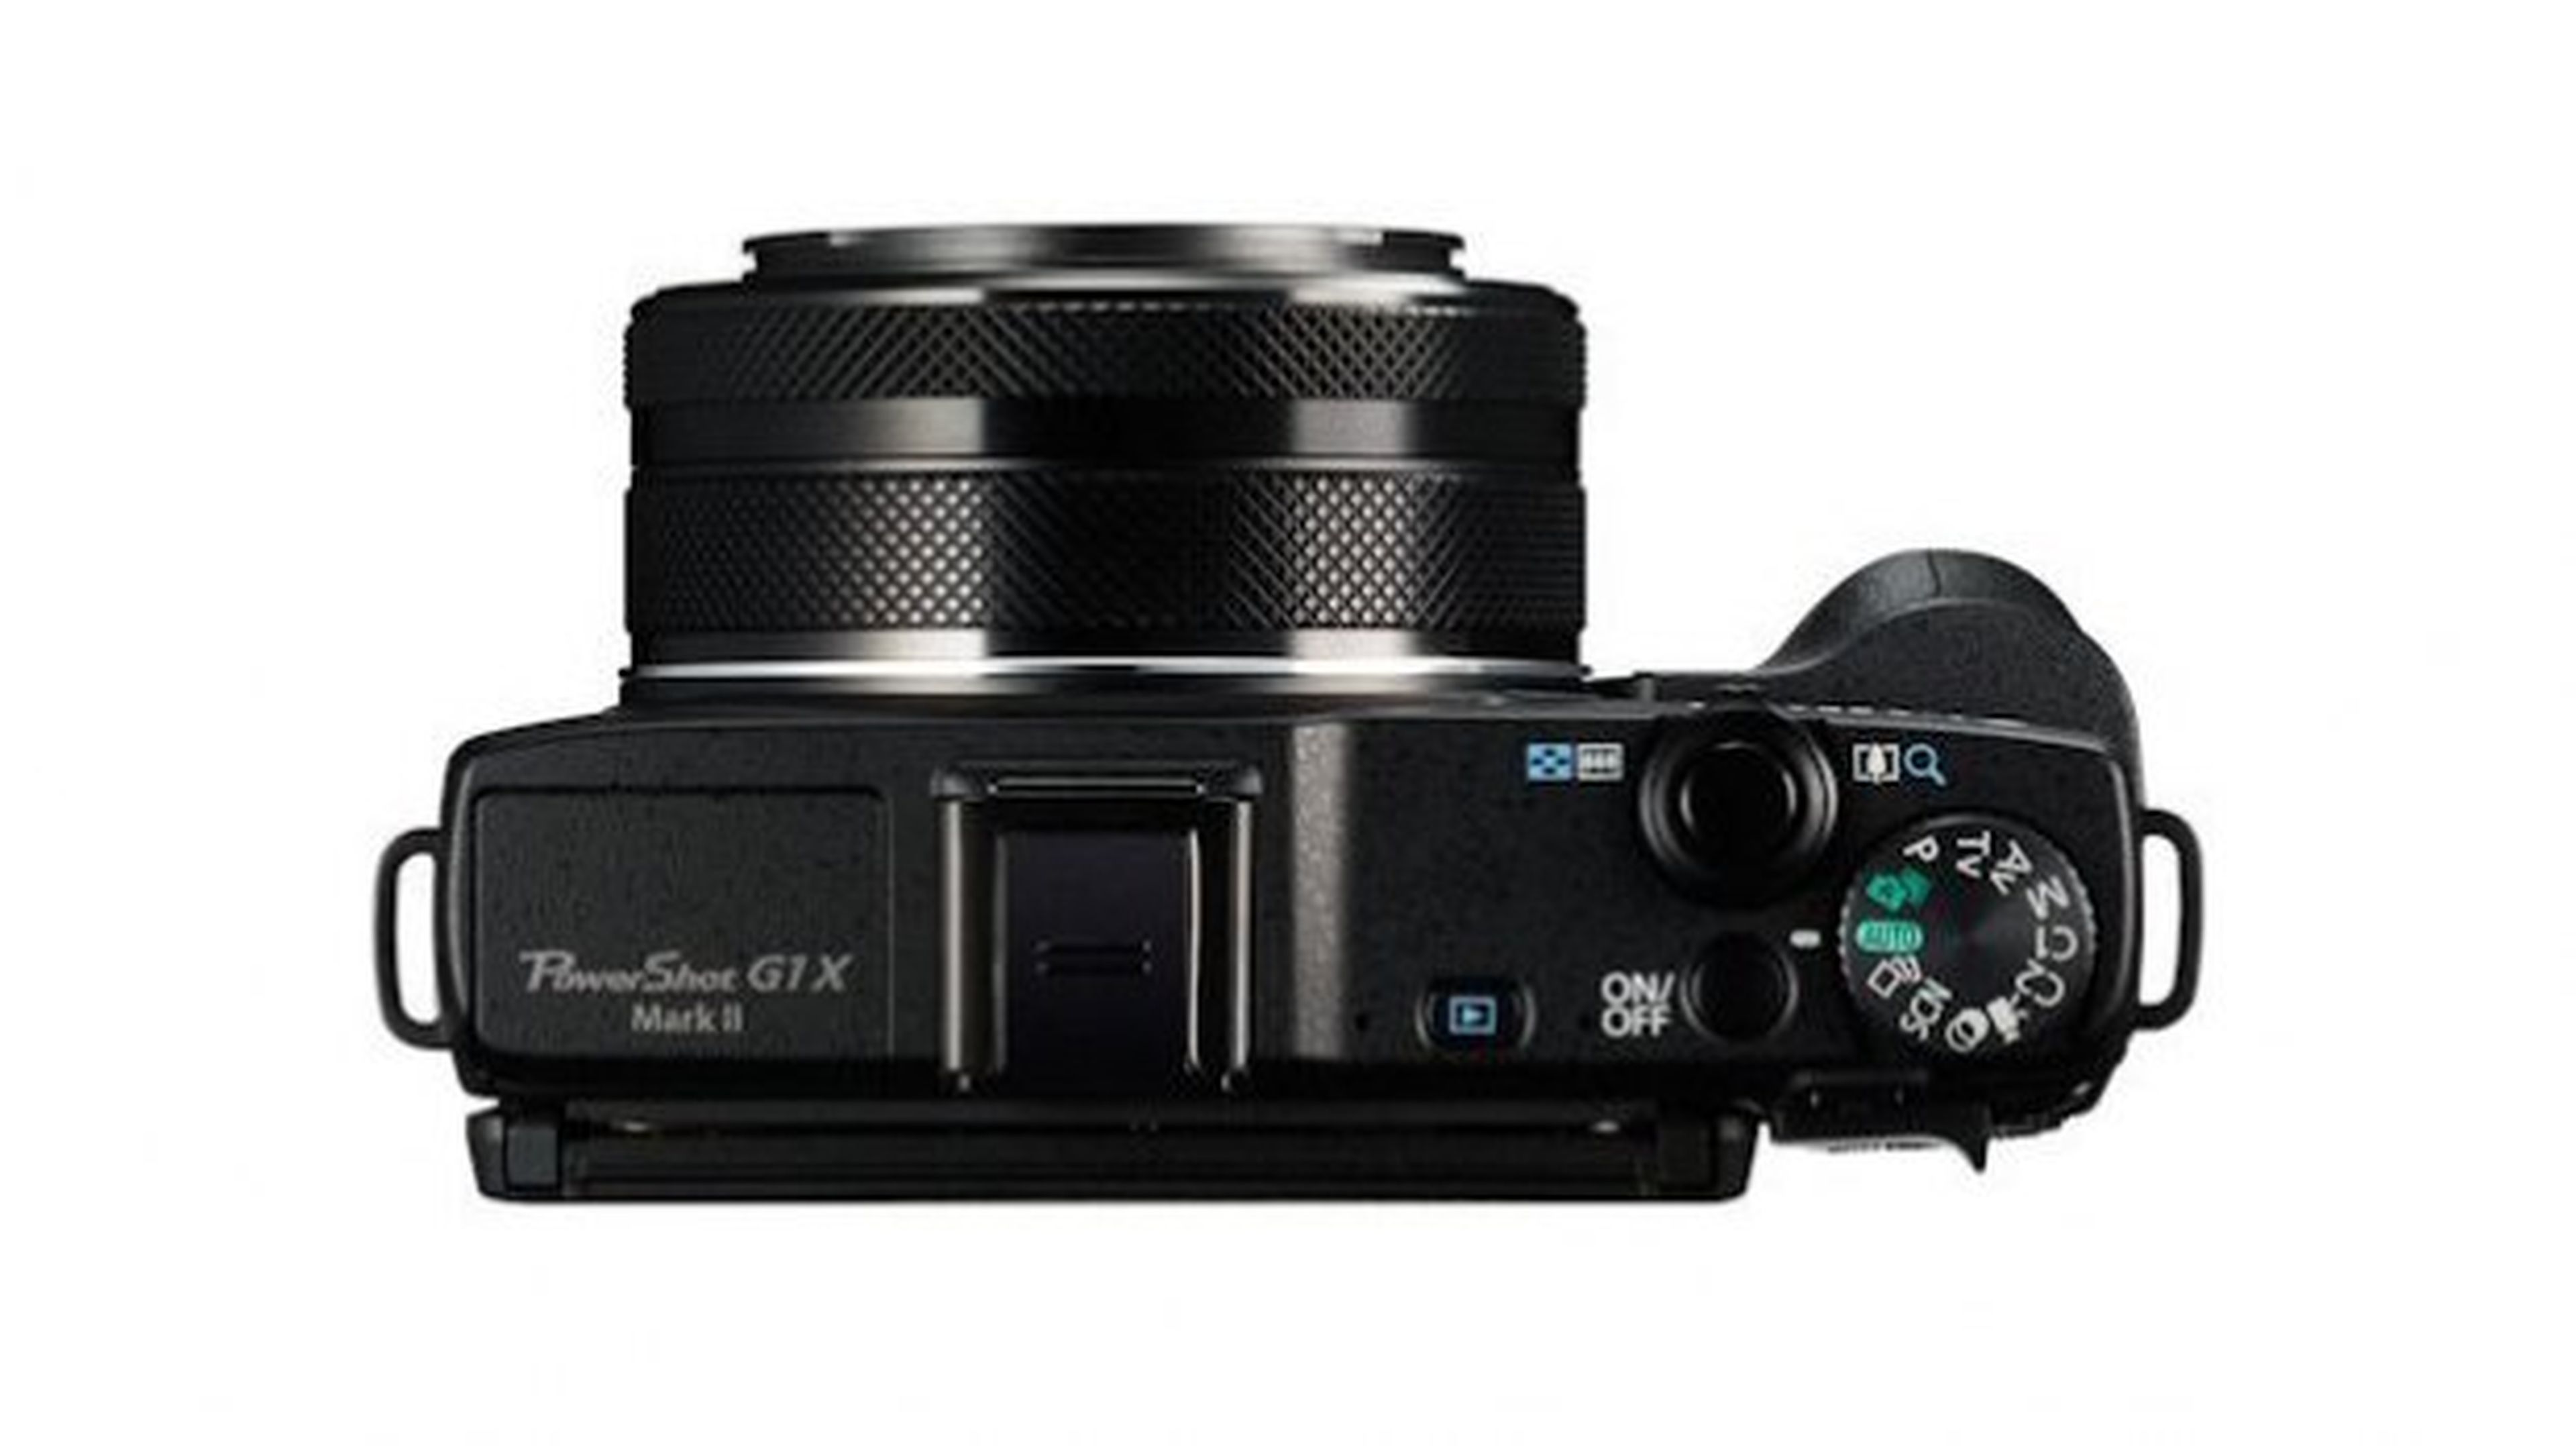 Canon PowerShot G1X Mark II